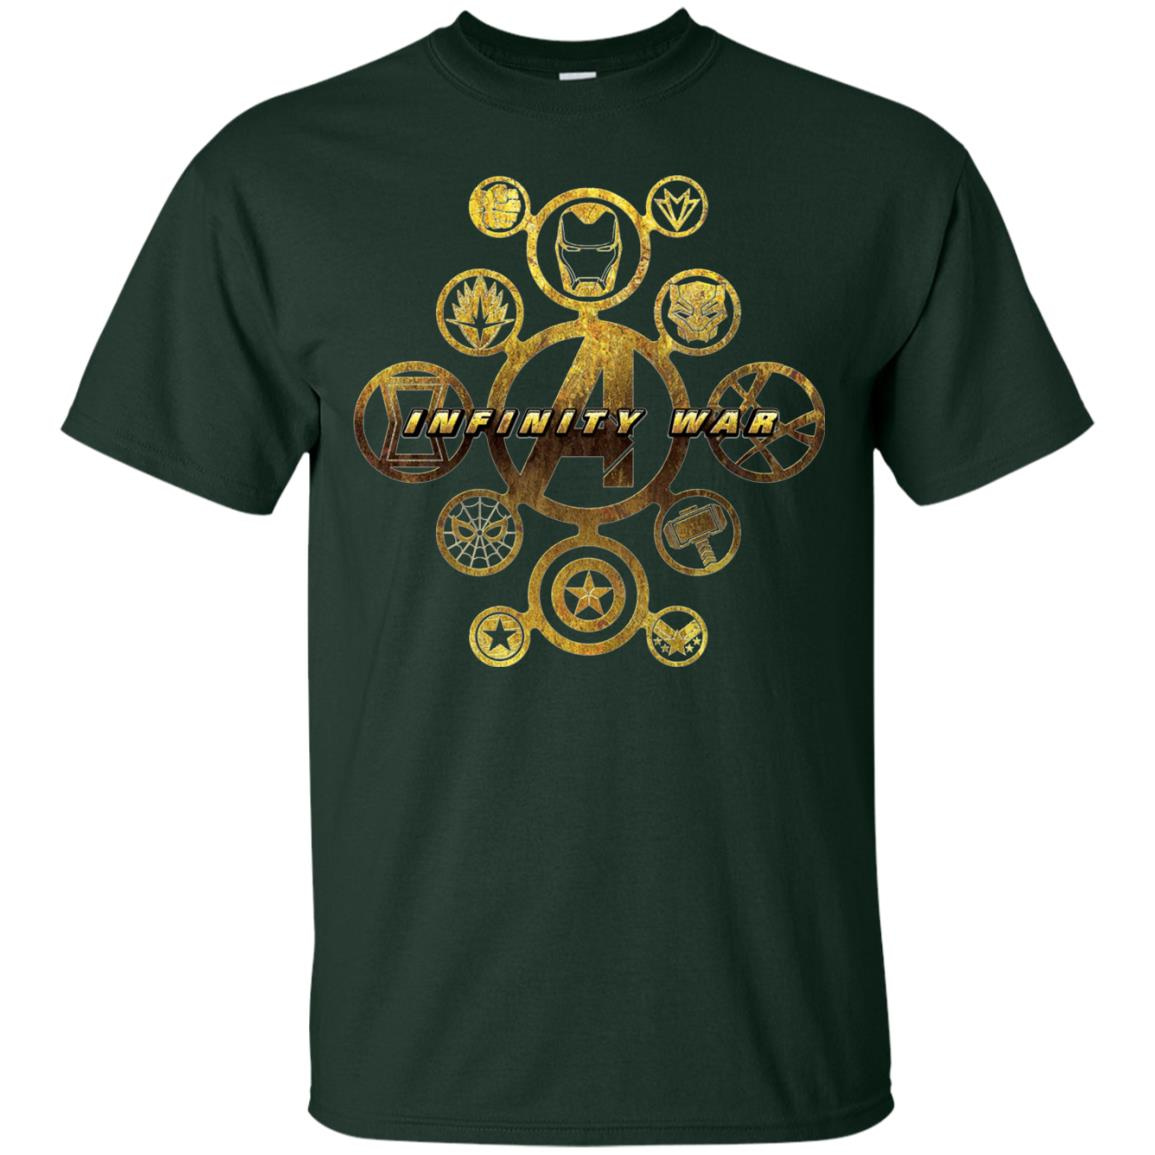 Inktee Store - Marvel Avengers Infinity War Gold Hero Icons Men’s T-Shirt Image